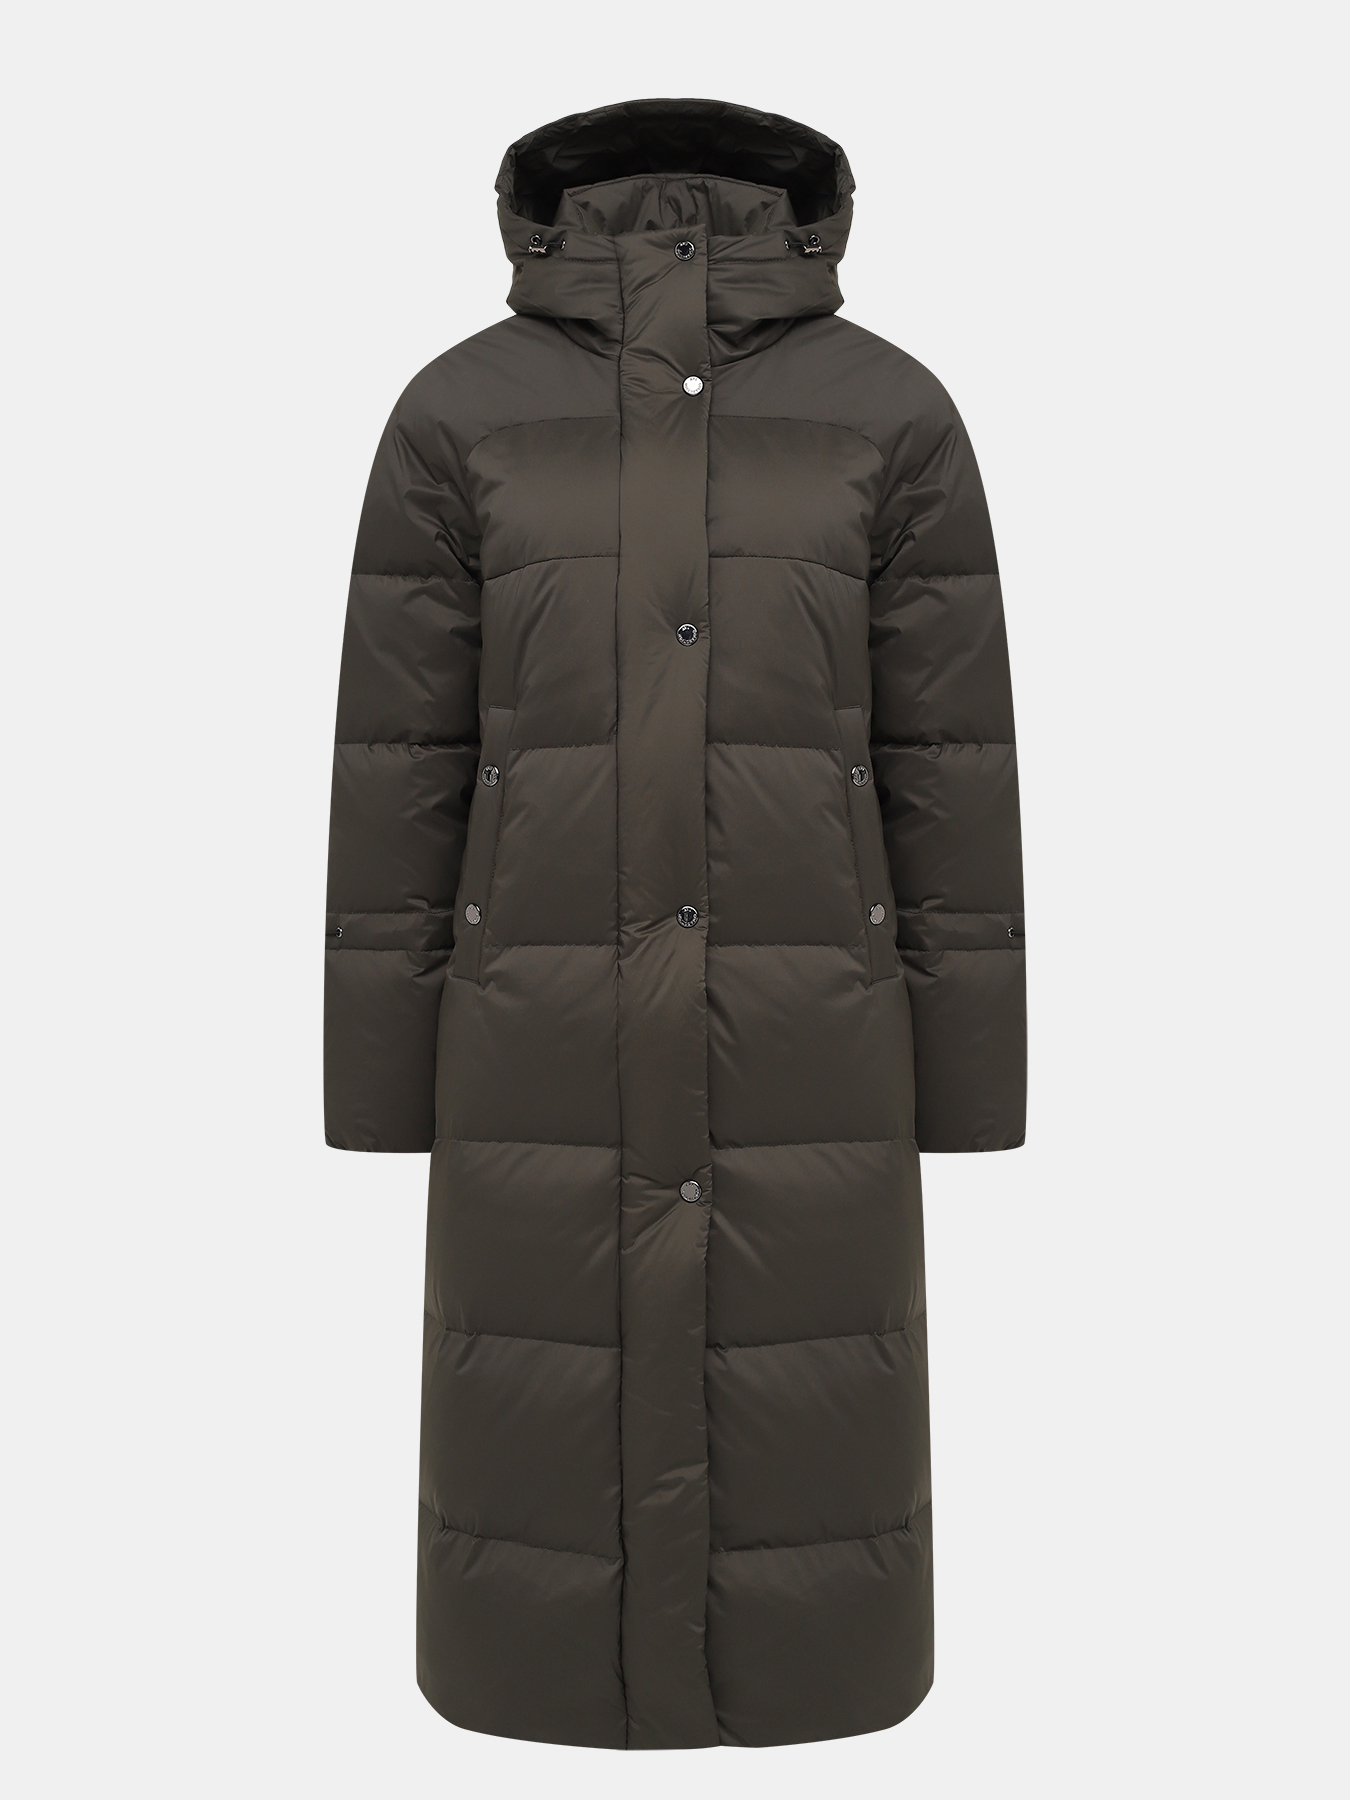 Пальто зимнее AVI 433638-022, цвет хаки, размер 48 - фото 1